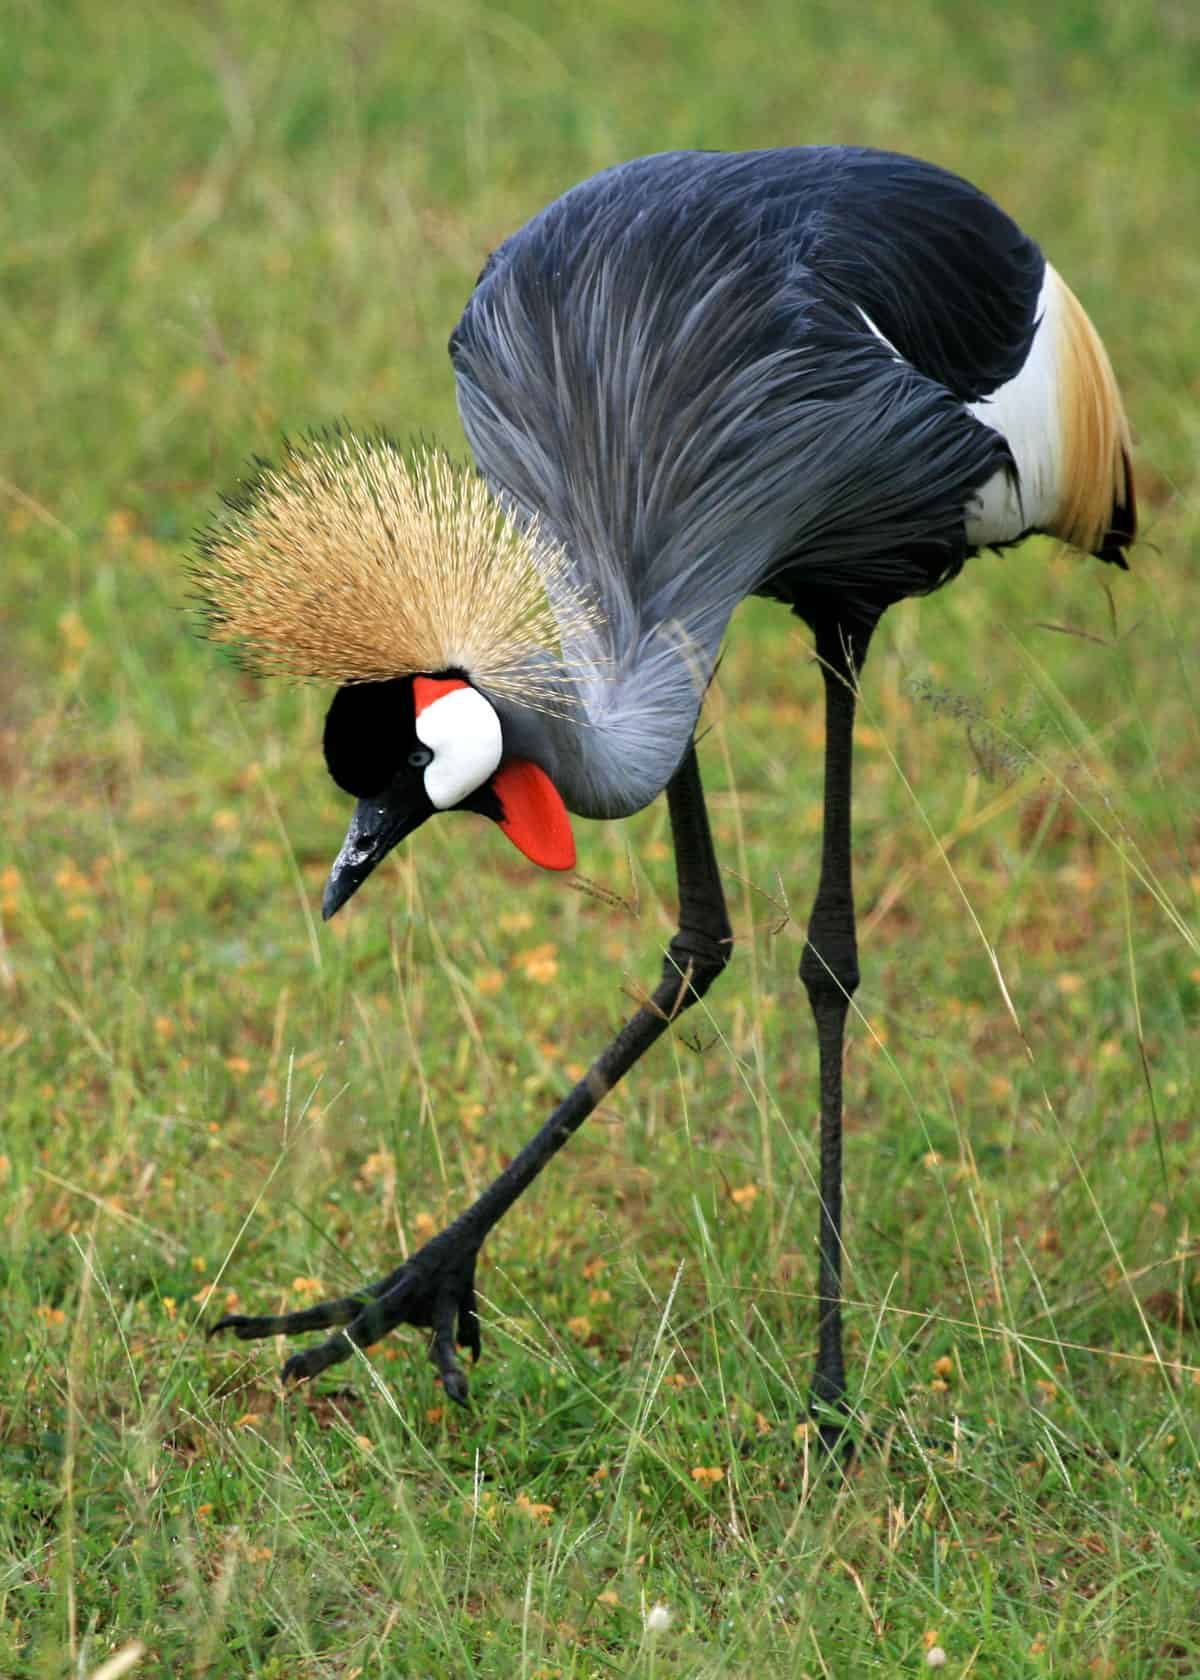 National bird of Uganda - Crested crane